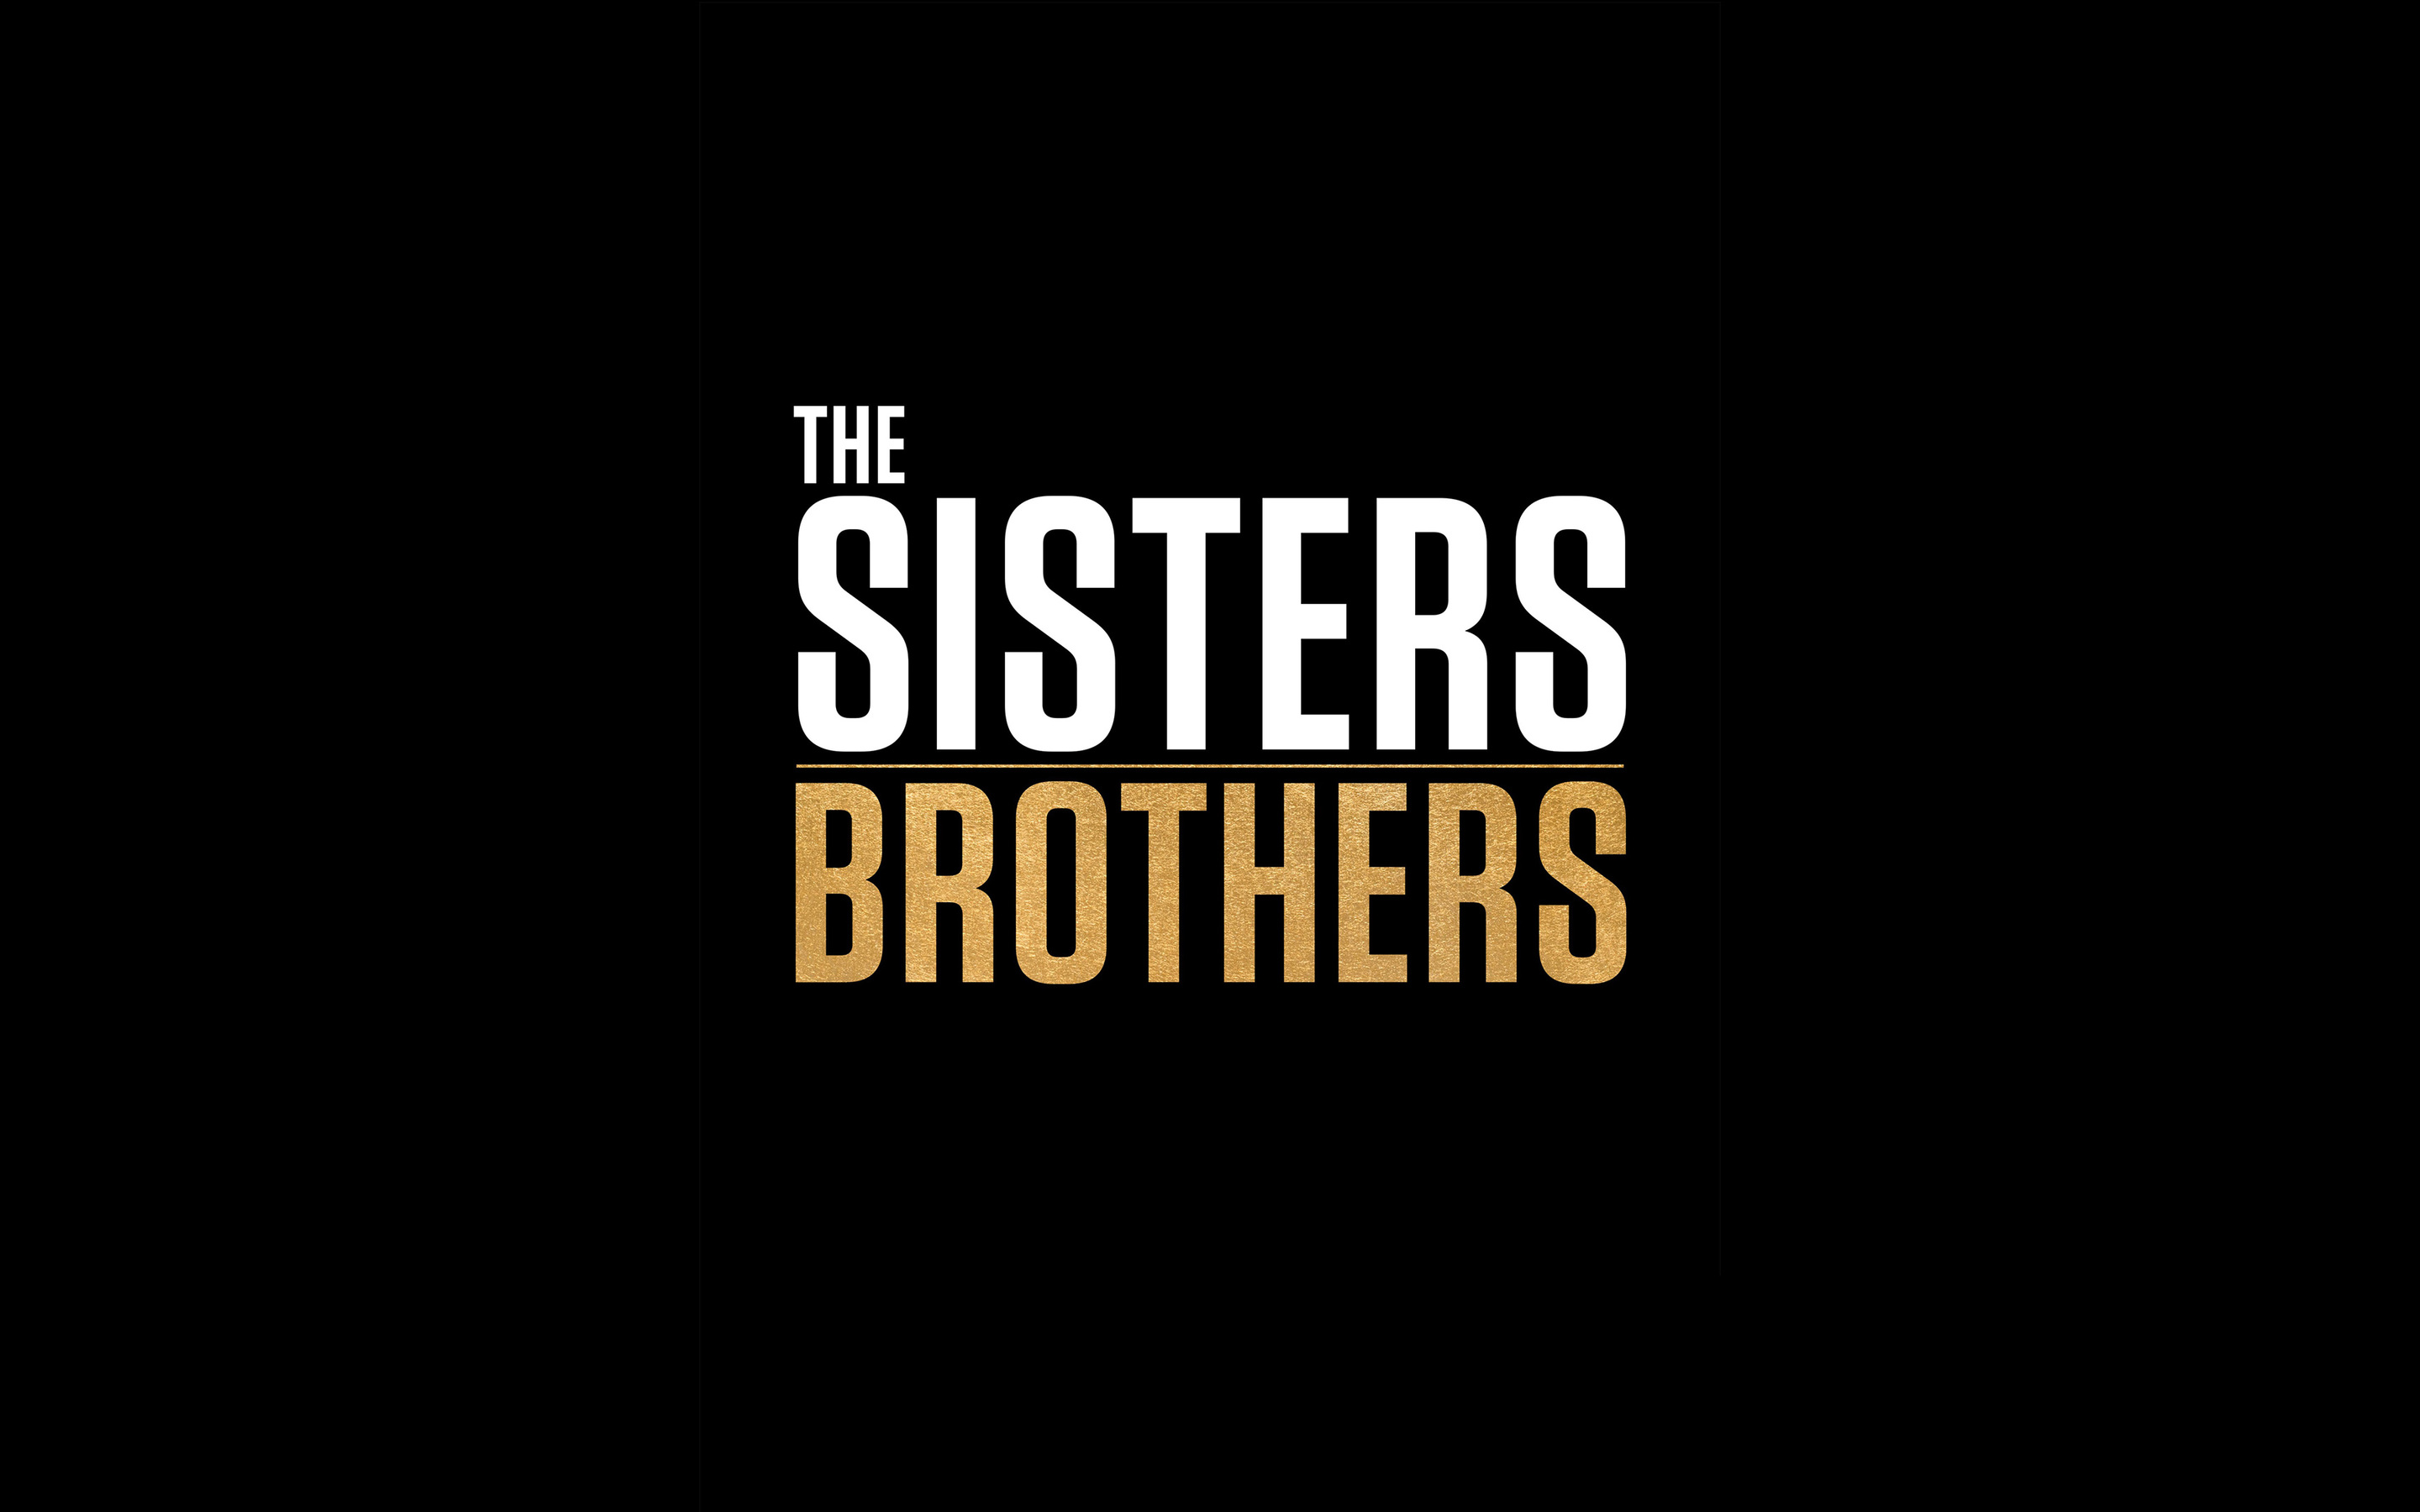 Have you got brothers or sisters. Братья Систерс 2018 Blu-ray 1c интерес. Брат обои.